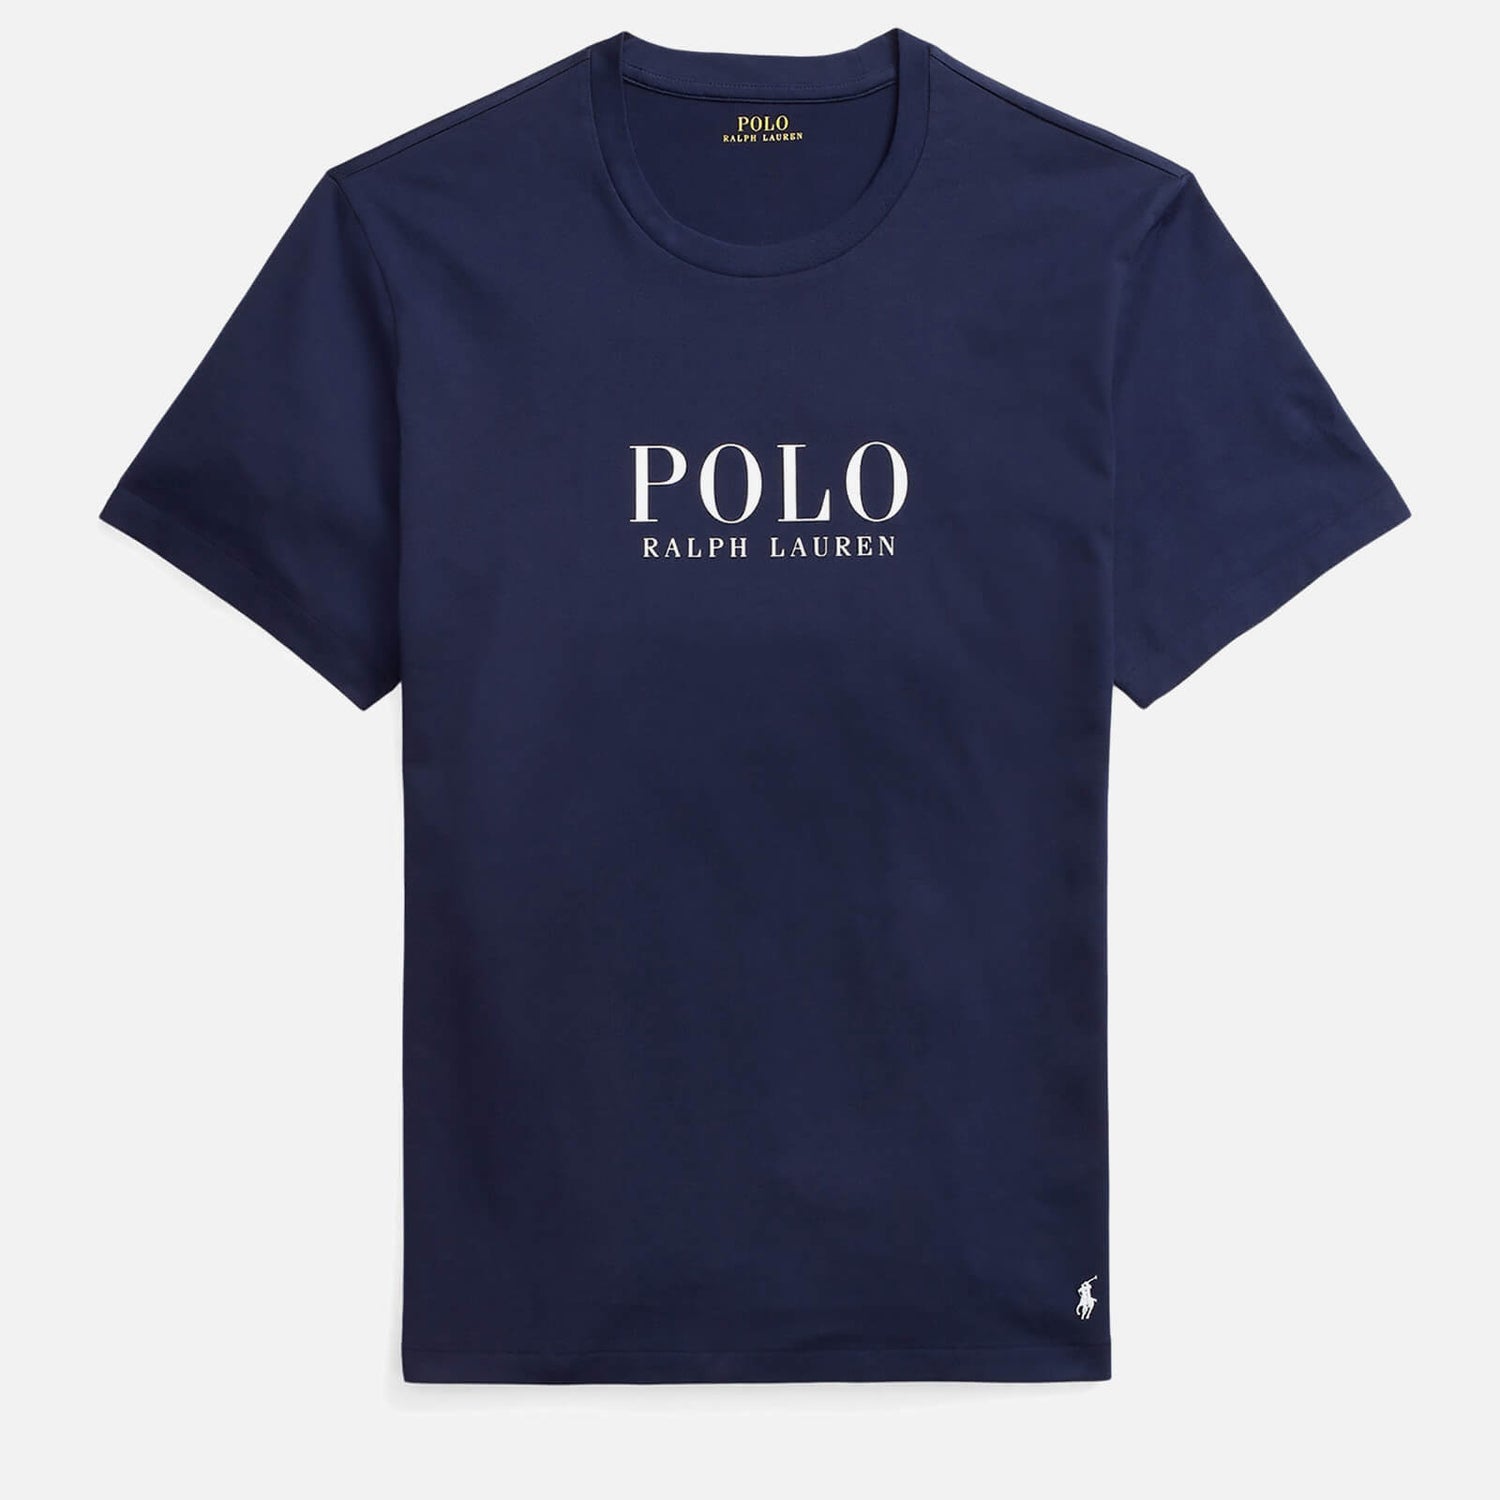 Polo Ralph Lauren Men's Boxed Logo T-Shirt - Cruise Navy - S